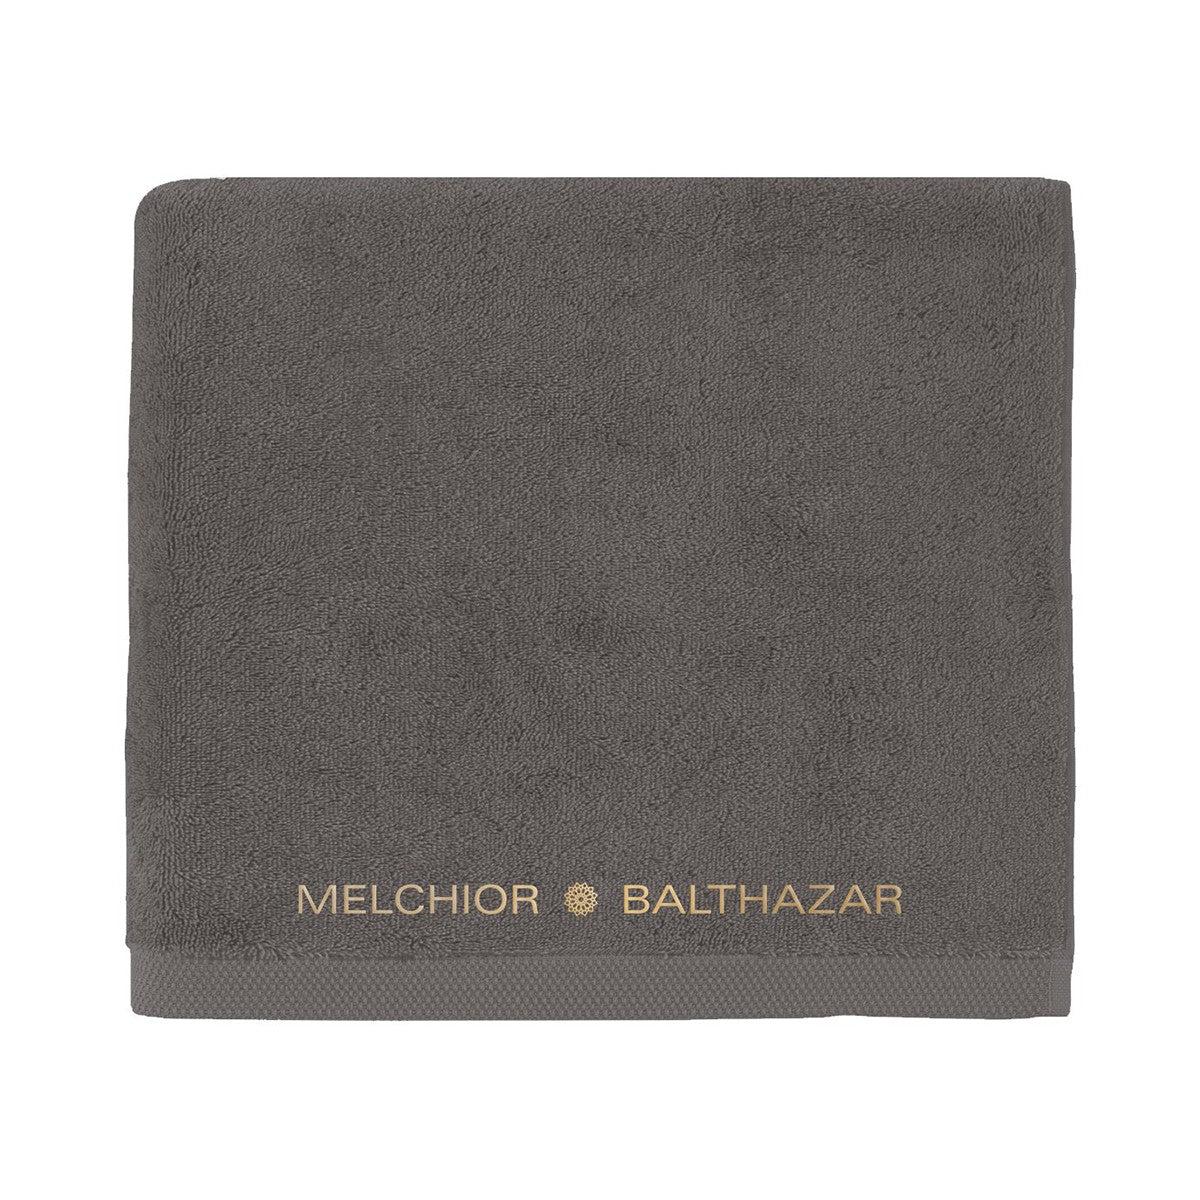 Melchior & Balthazar embroidered bath towel